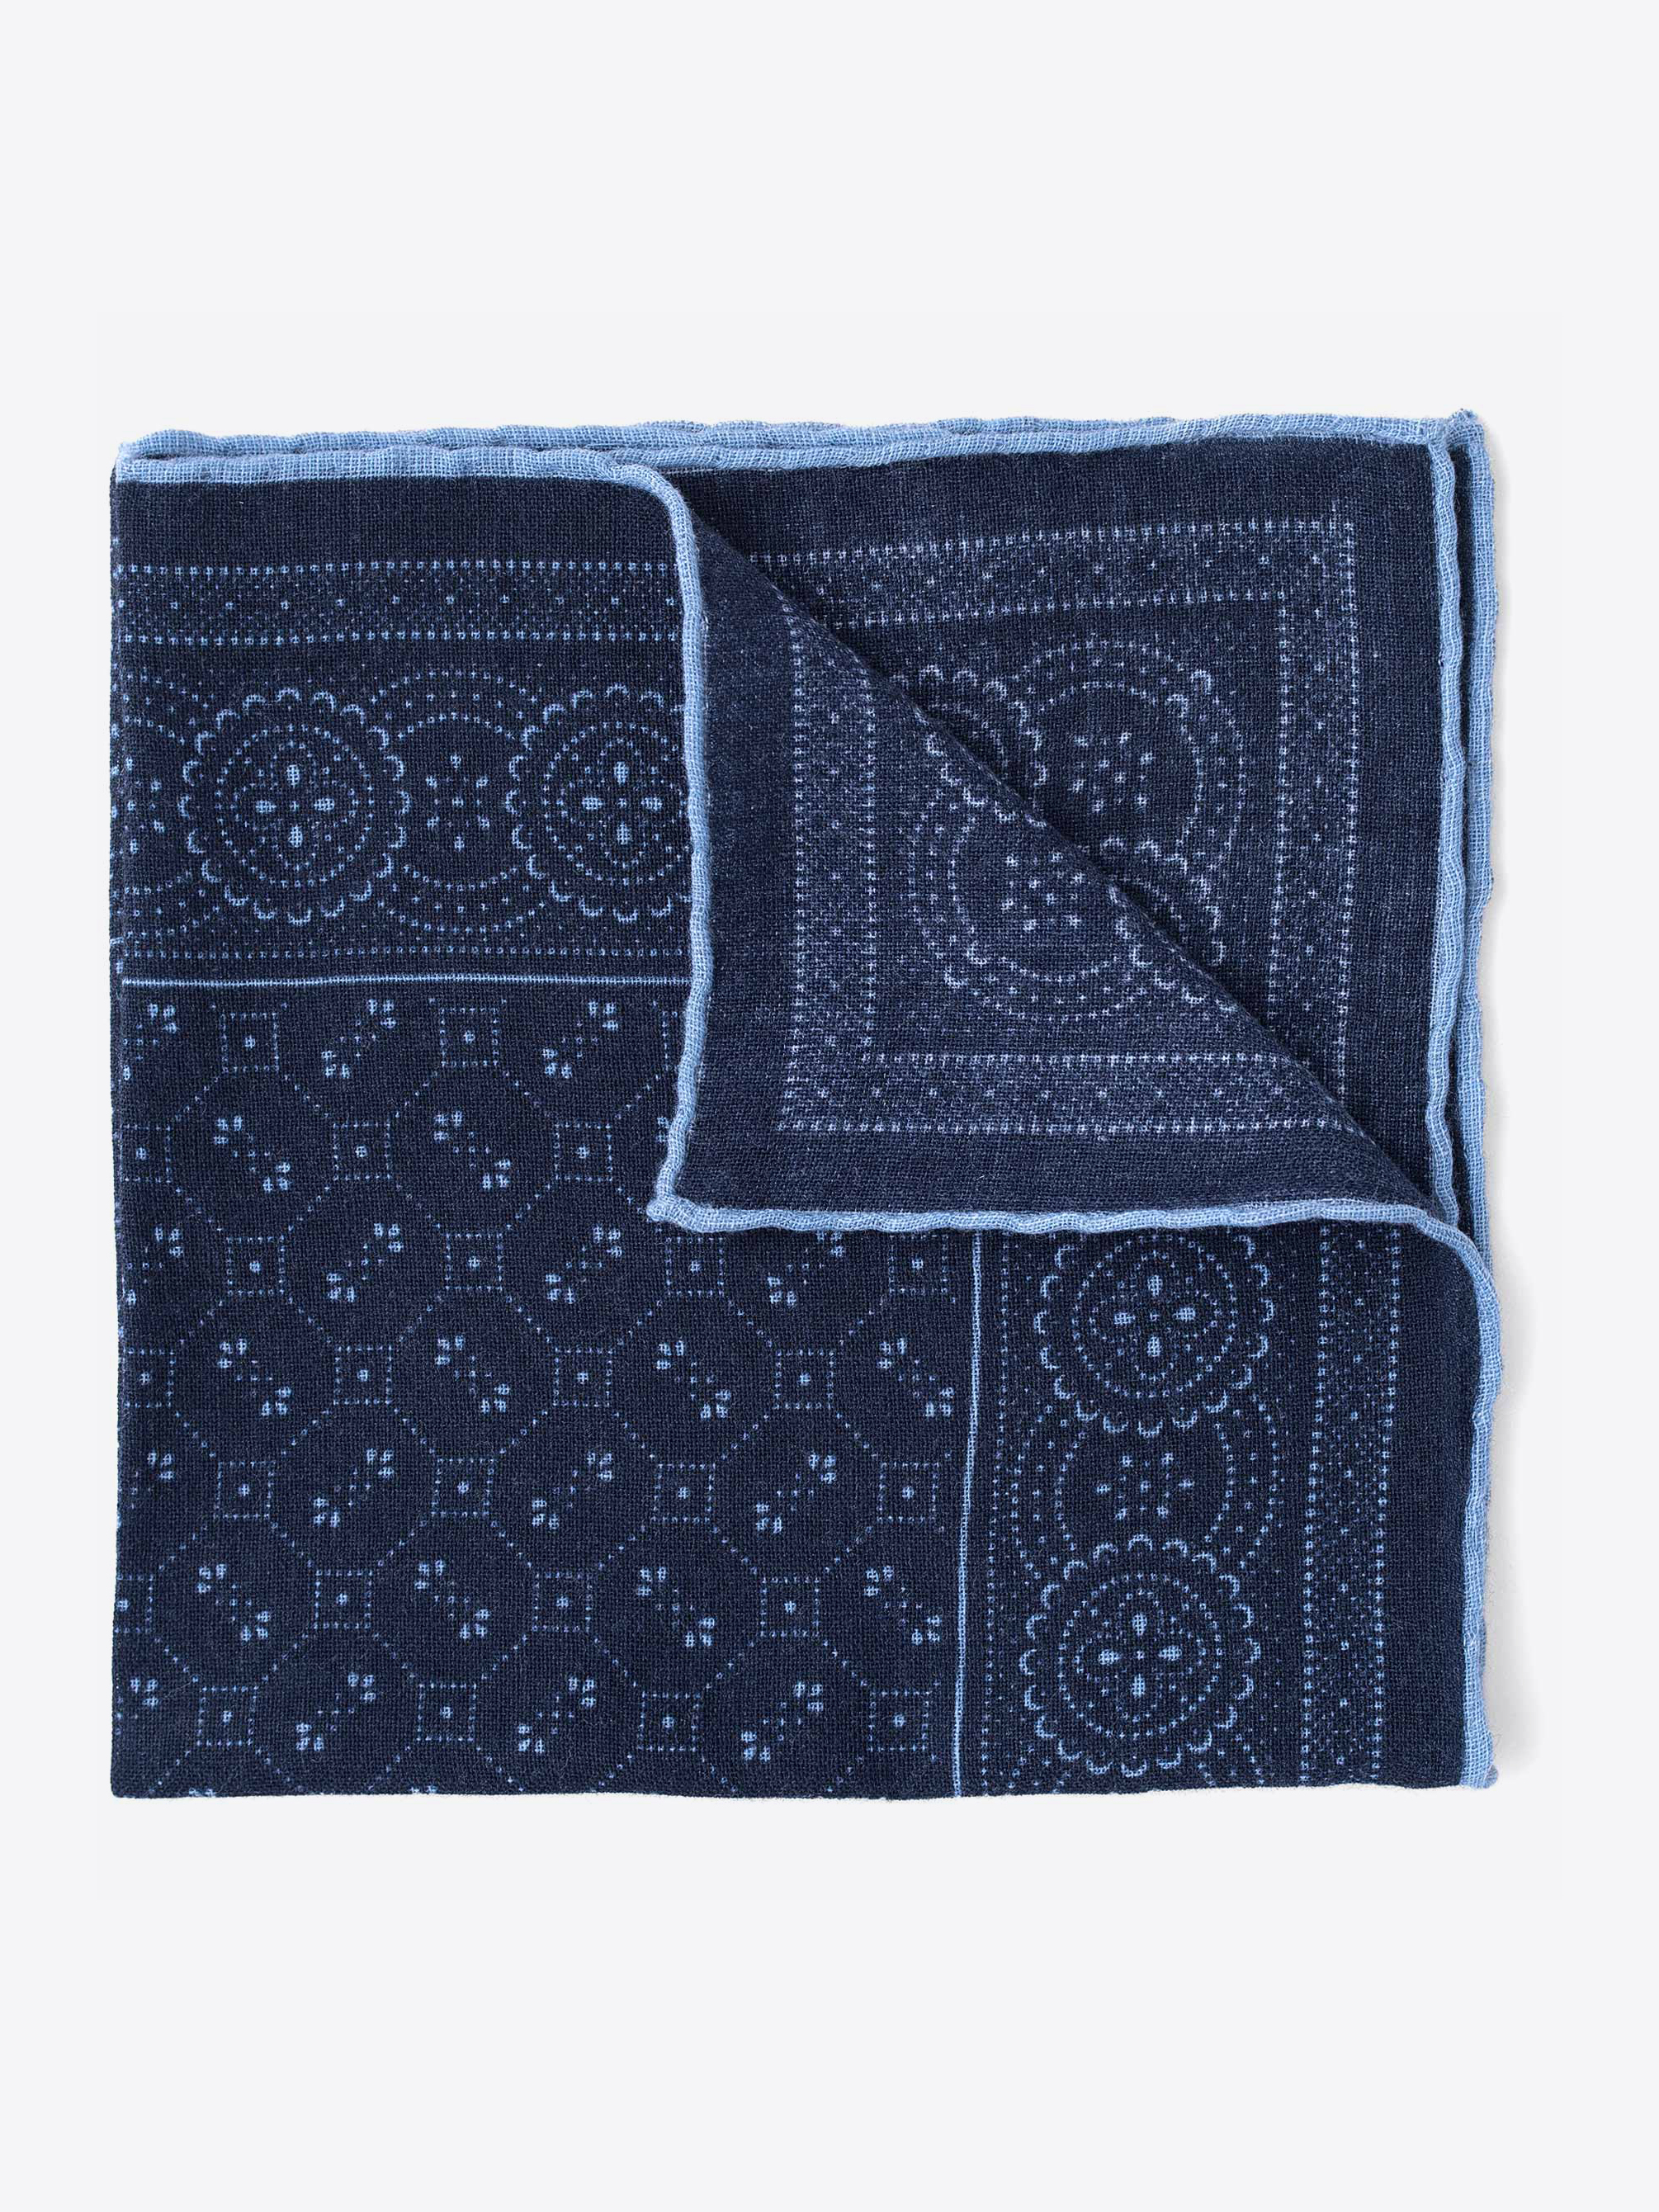 Zoom Image of Navy Bandana Print Wool Pocket Square